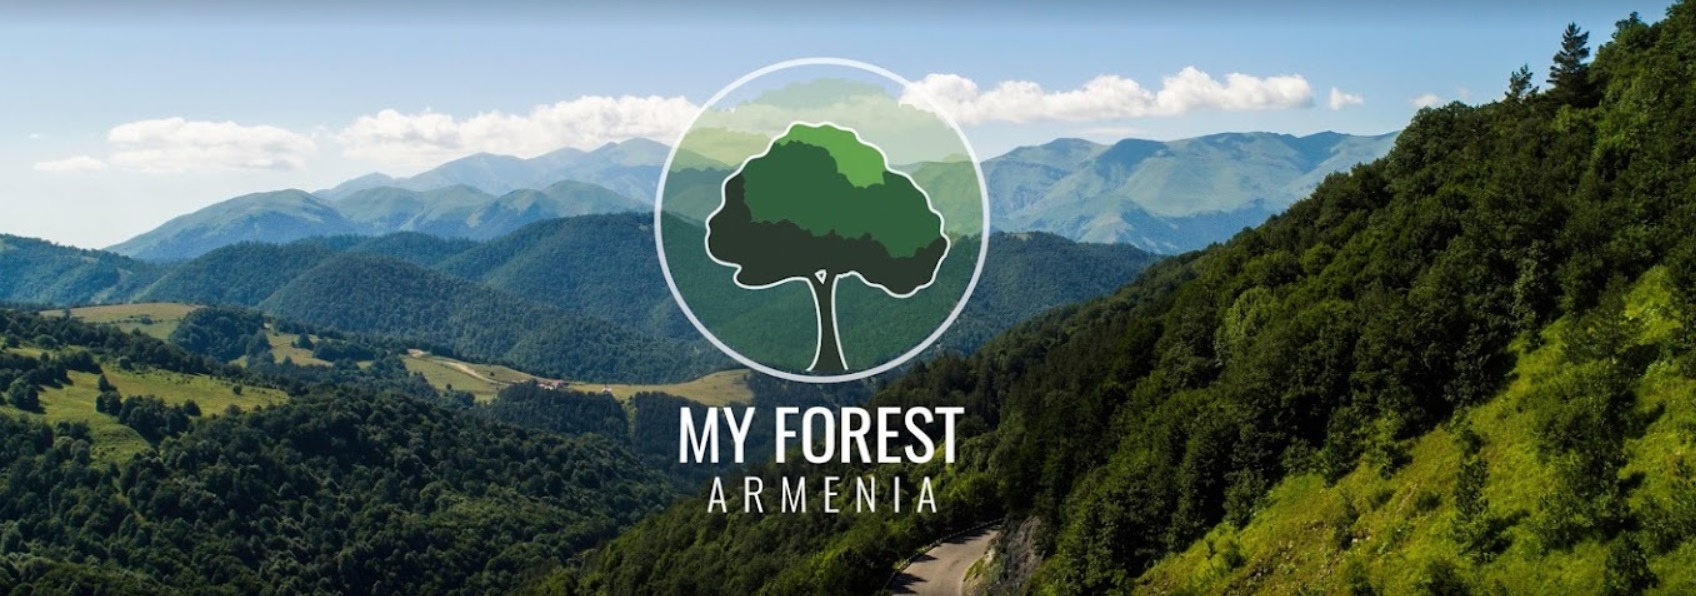 My Forest Armenia